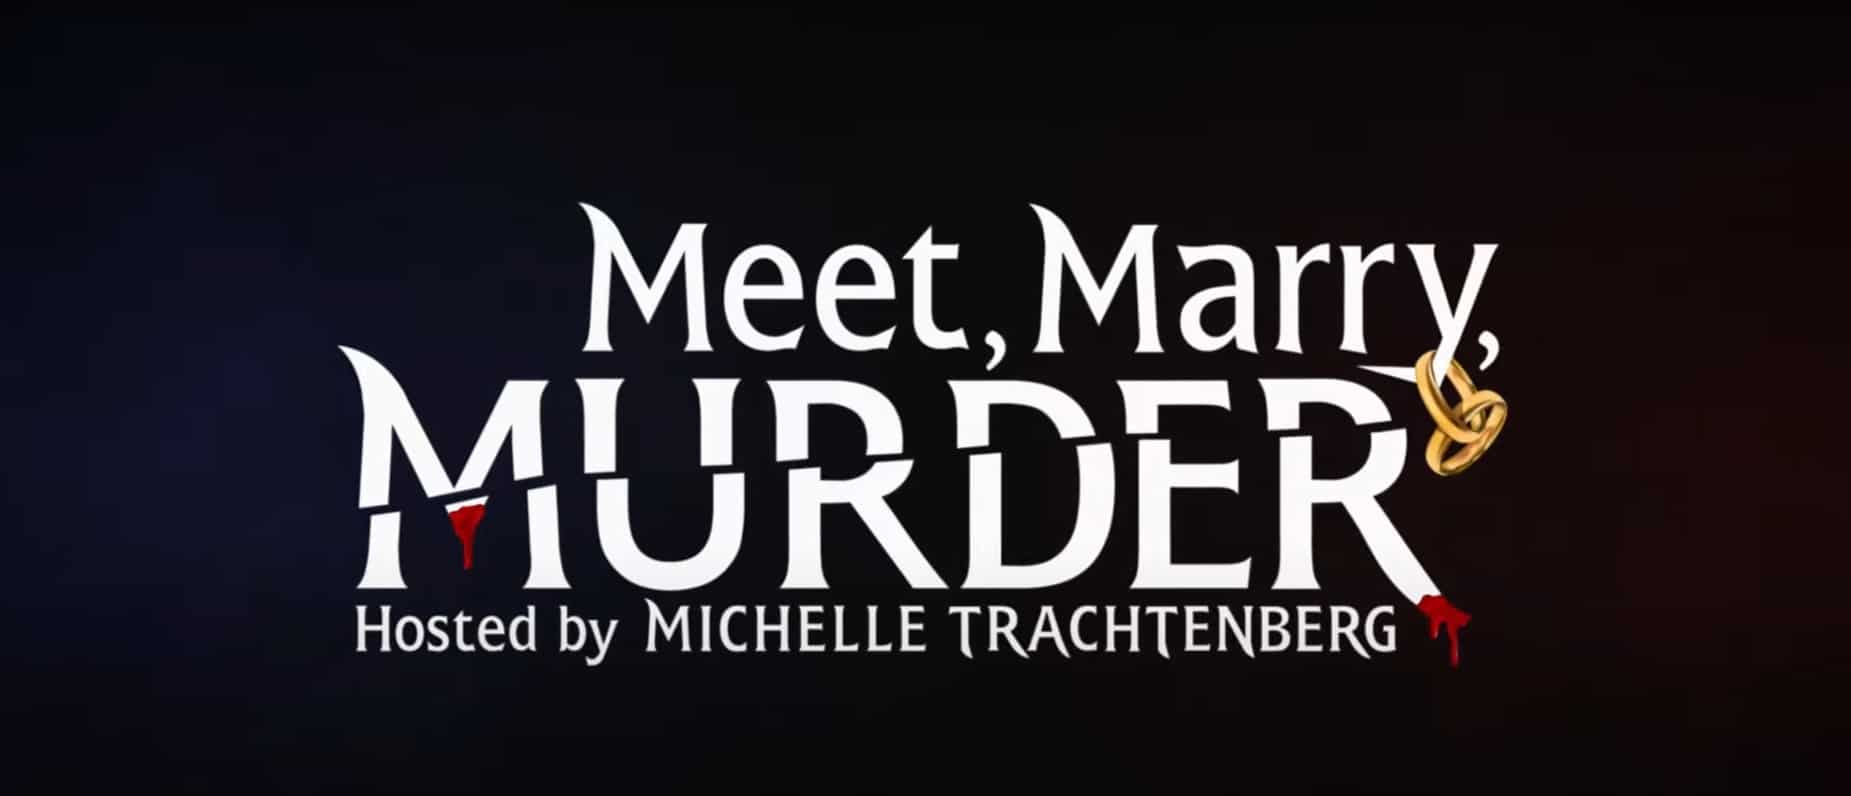 Meet Marry Murder Streaming Guide